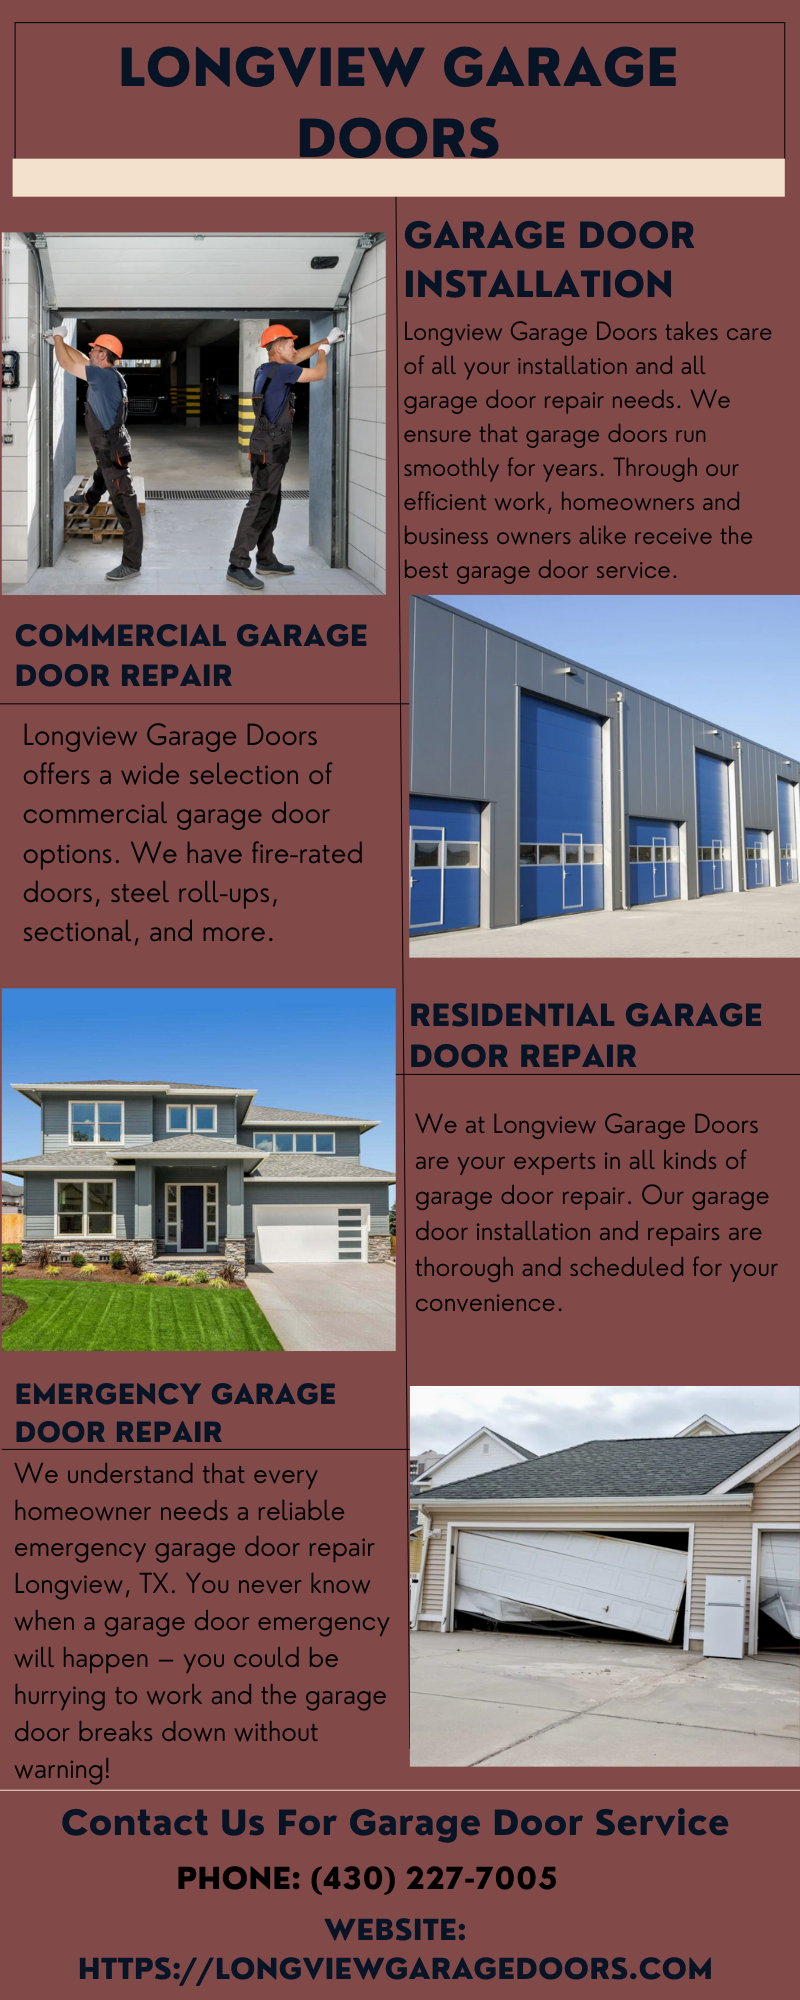 Longview Garage Doors.png | Pearltrees